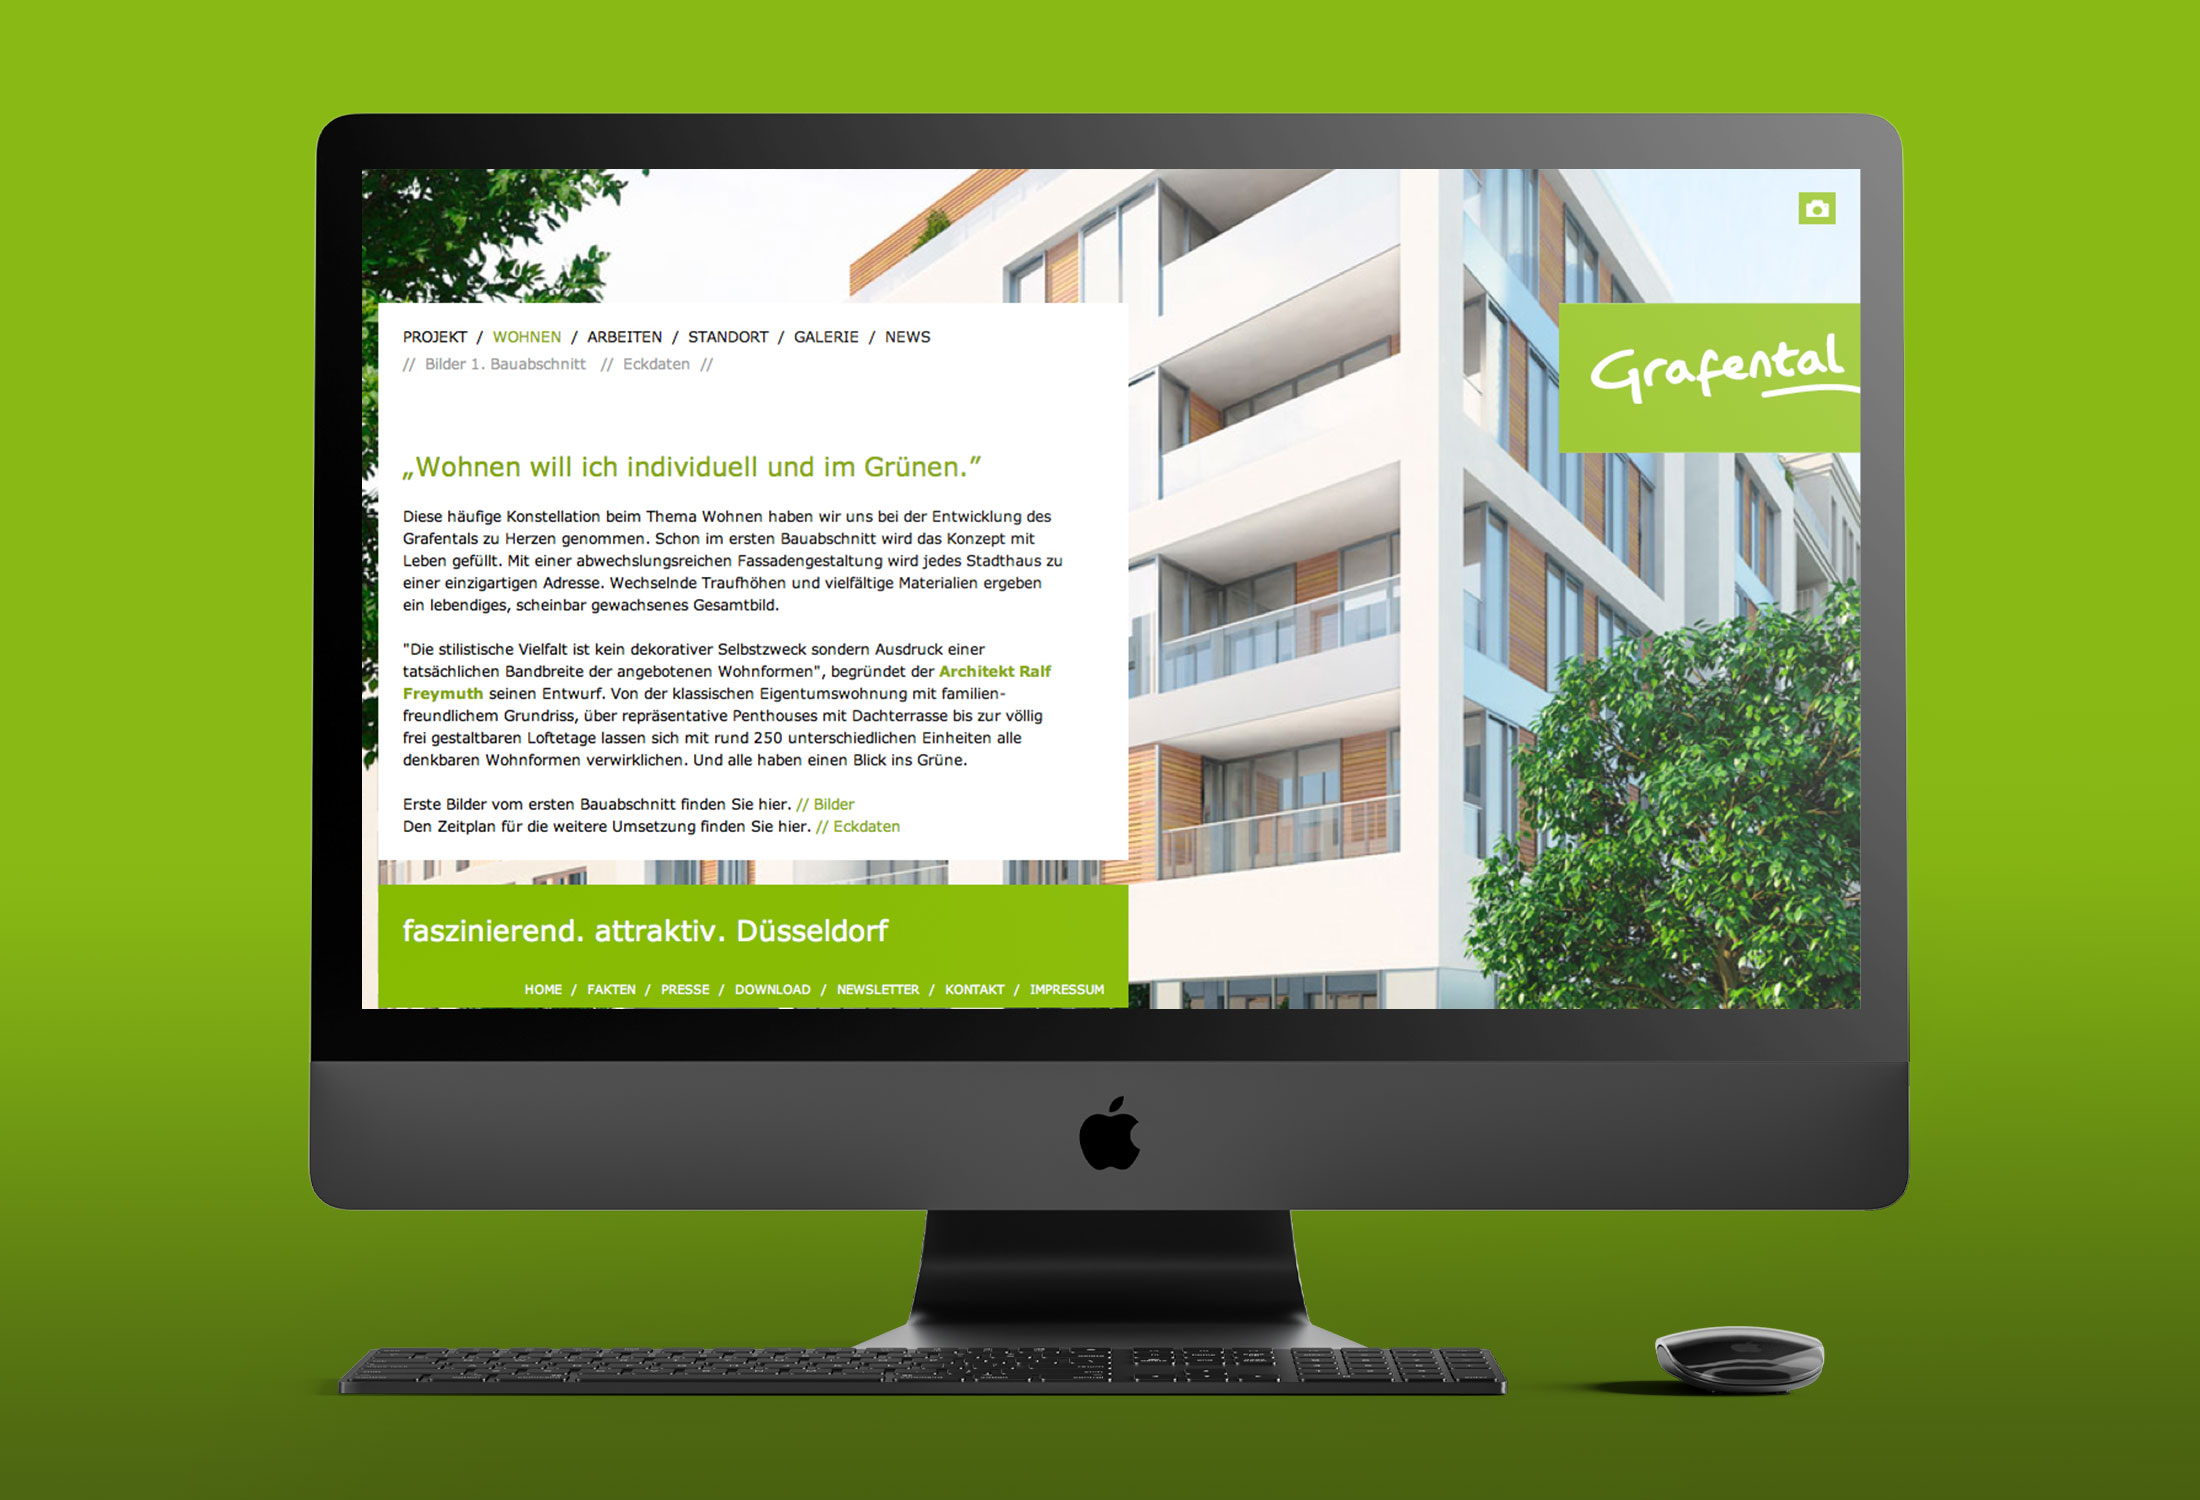 Grafental Website Immobilien Marketing 2